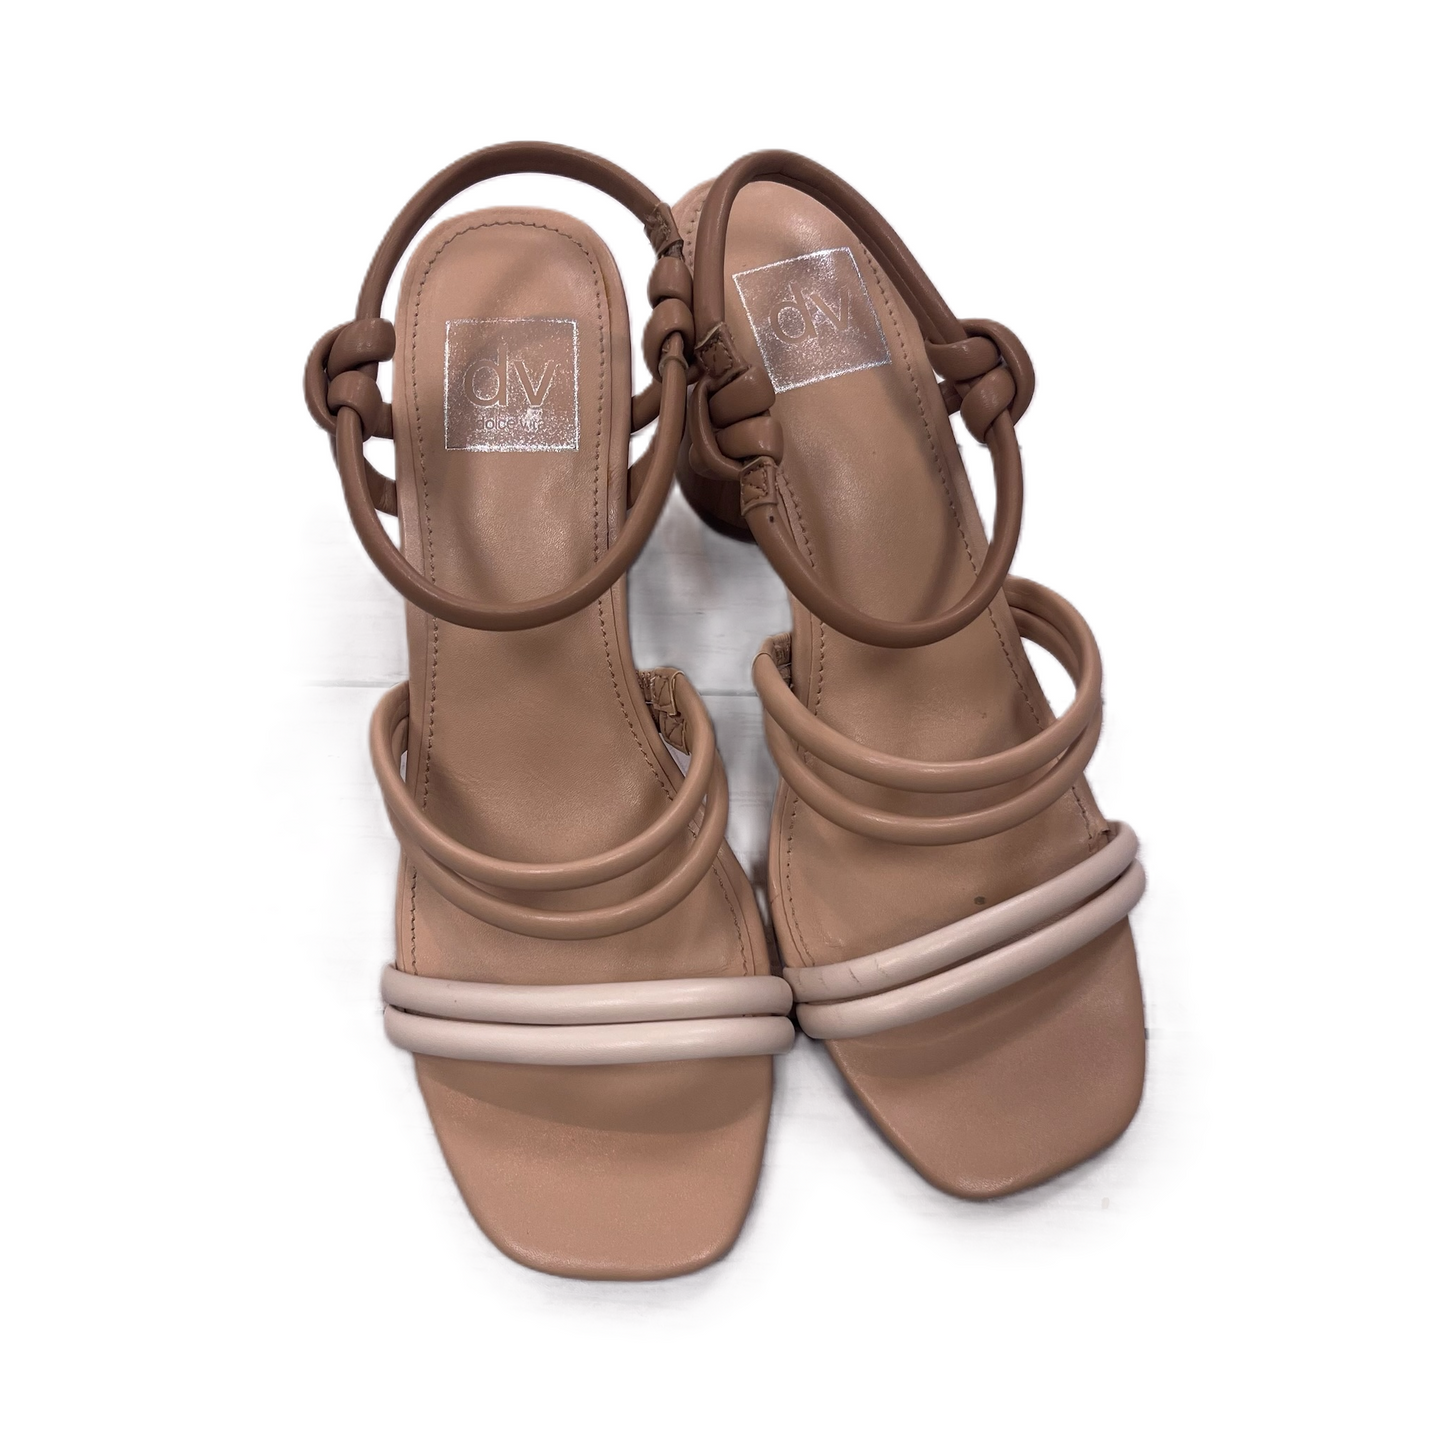 Tan Sandals Heels Block By Dolce Vita, Size: 8.5